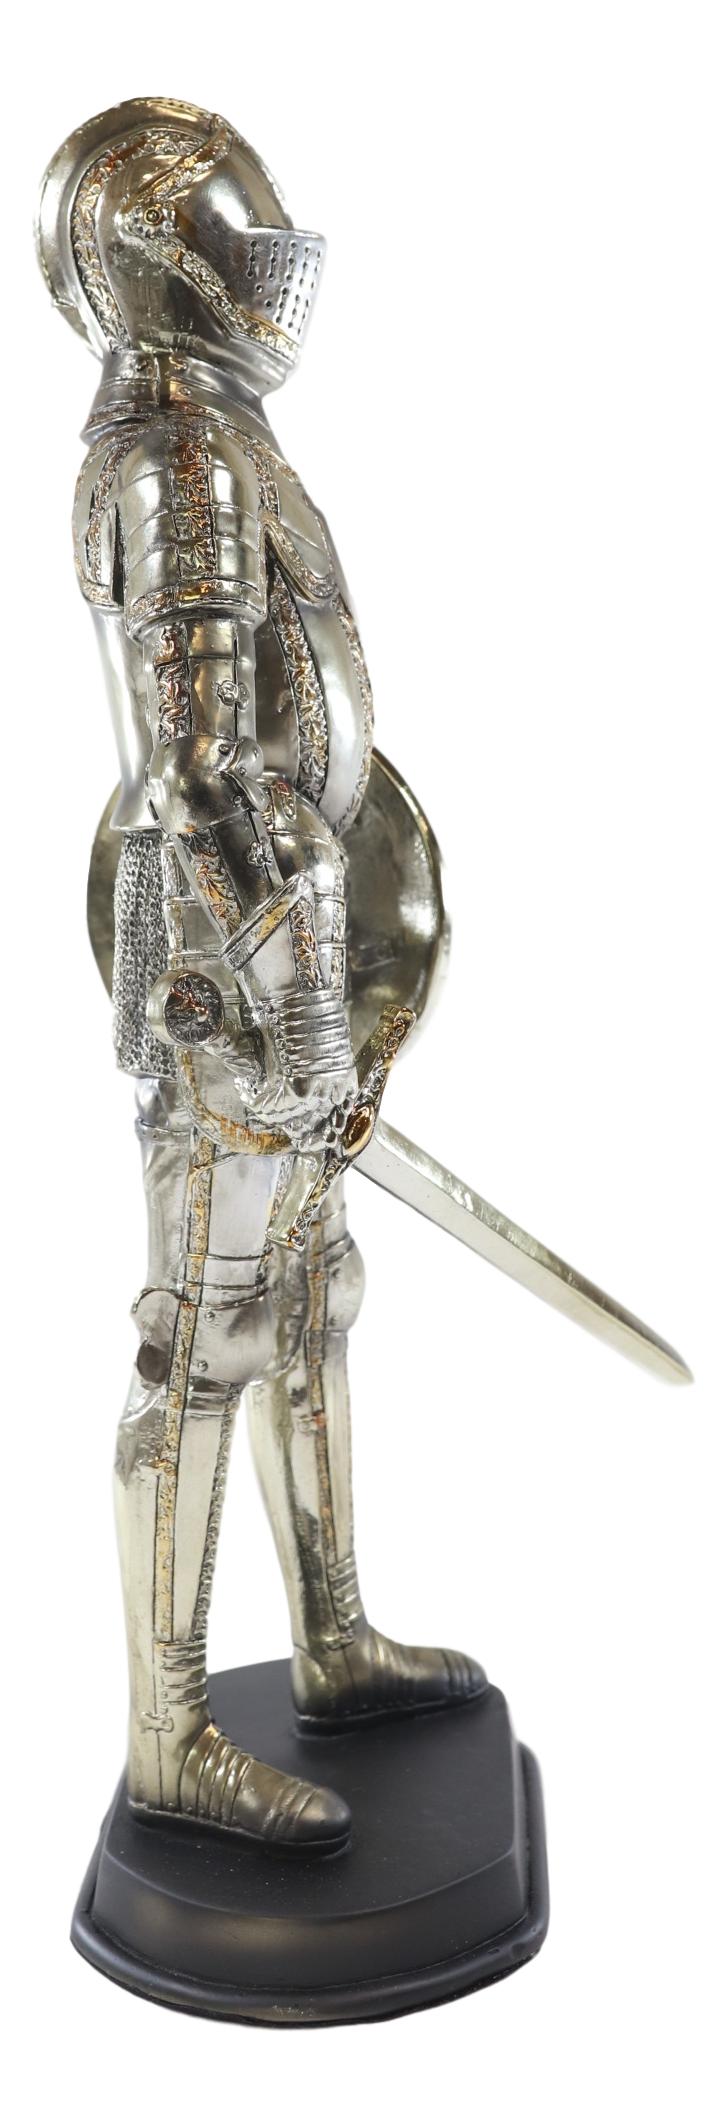 French Royal Grand Armee Fleur De Lis Elite Knight with Sword & Shield Figurine